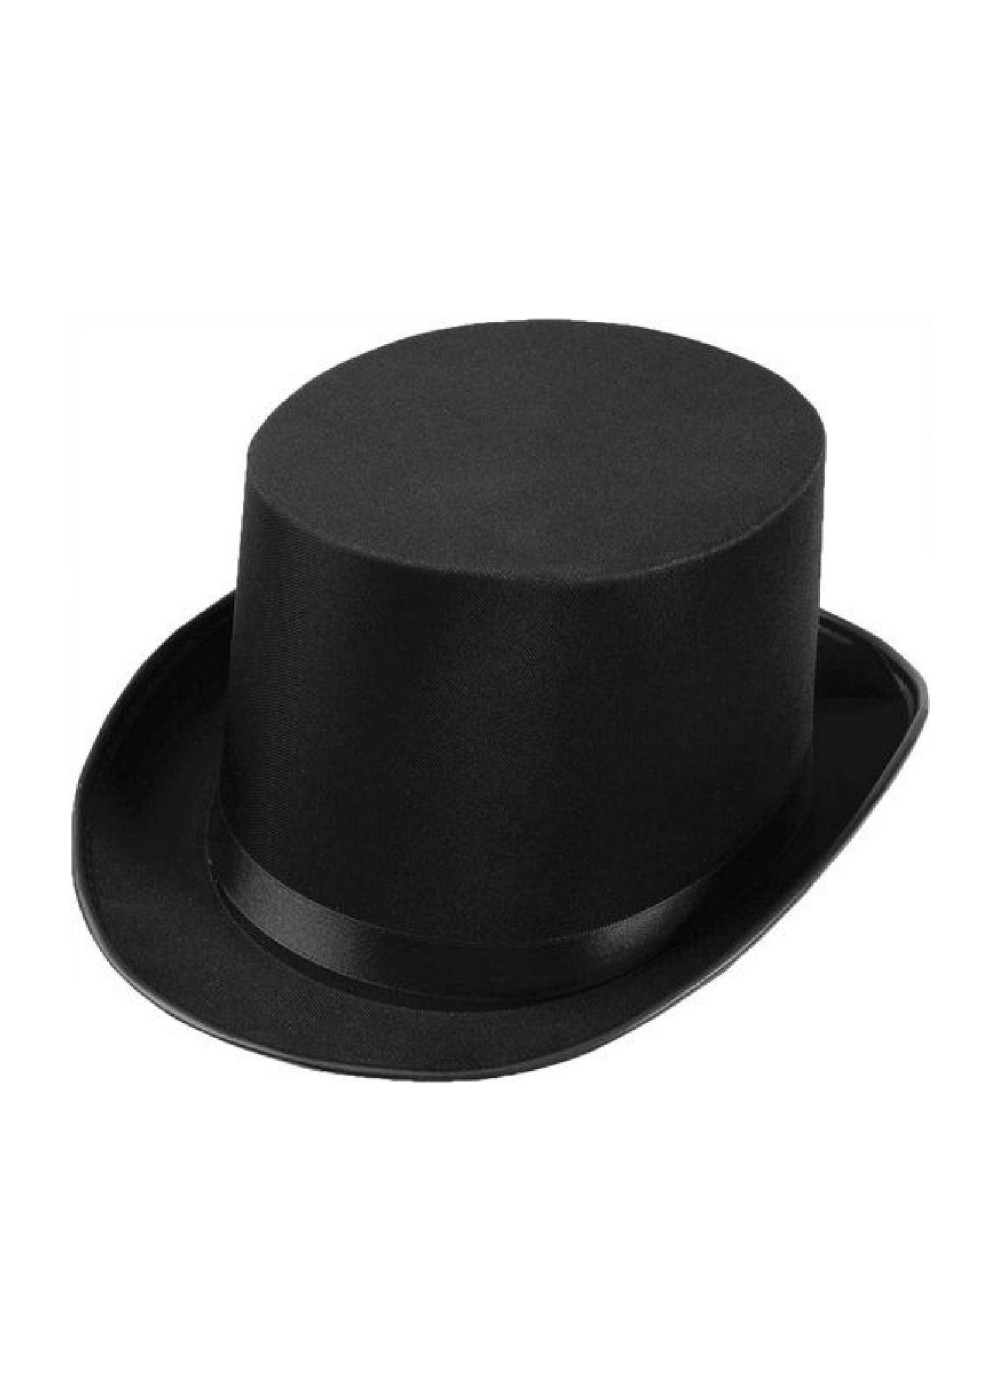  Top Hat Black